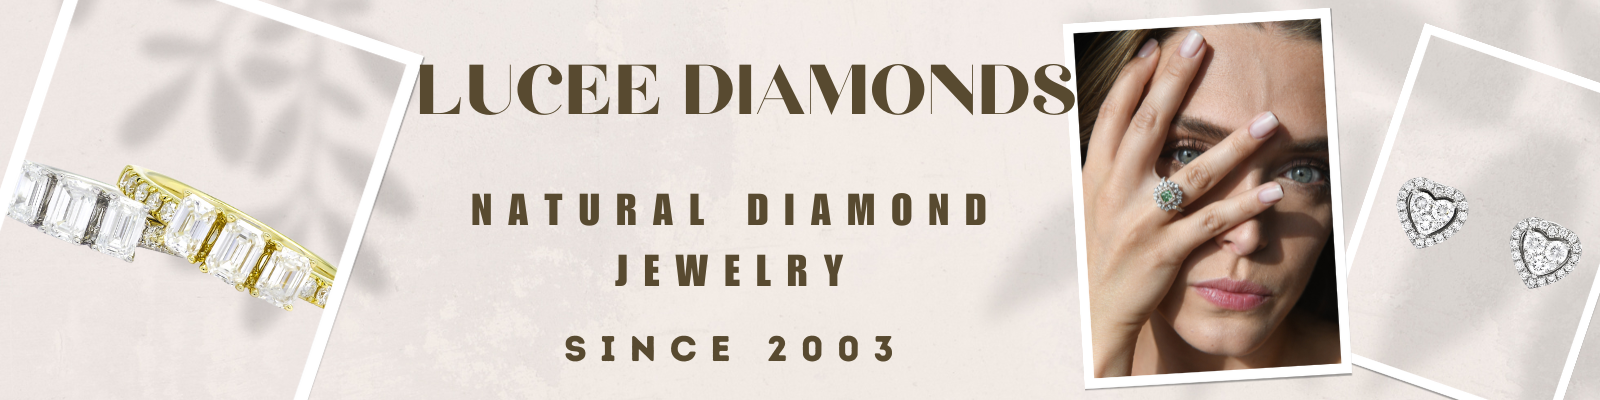 Lucee Diamonds